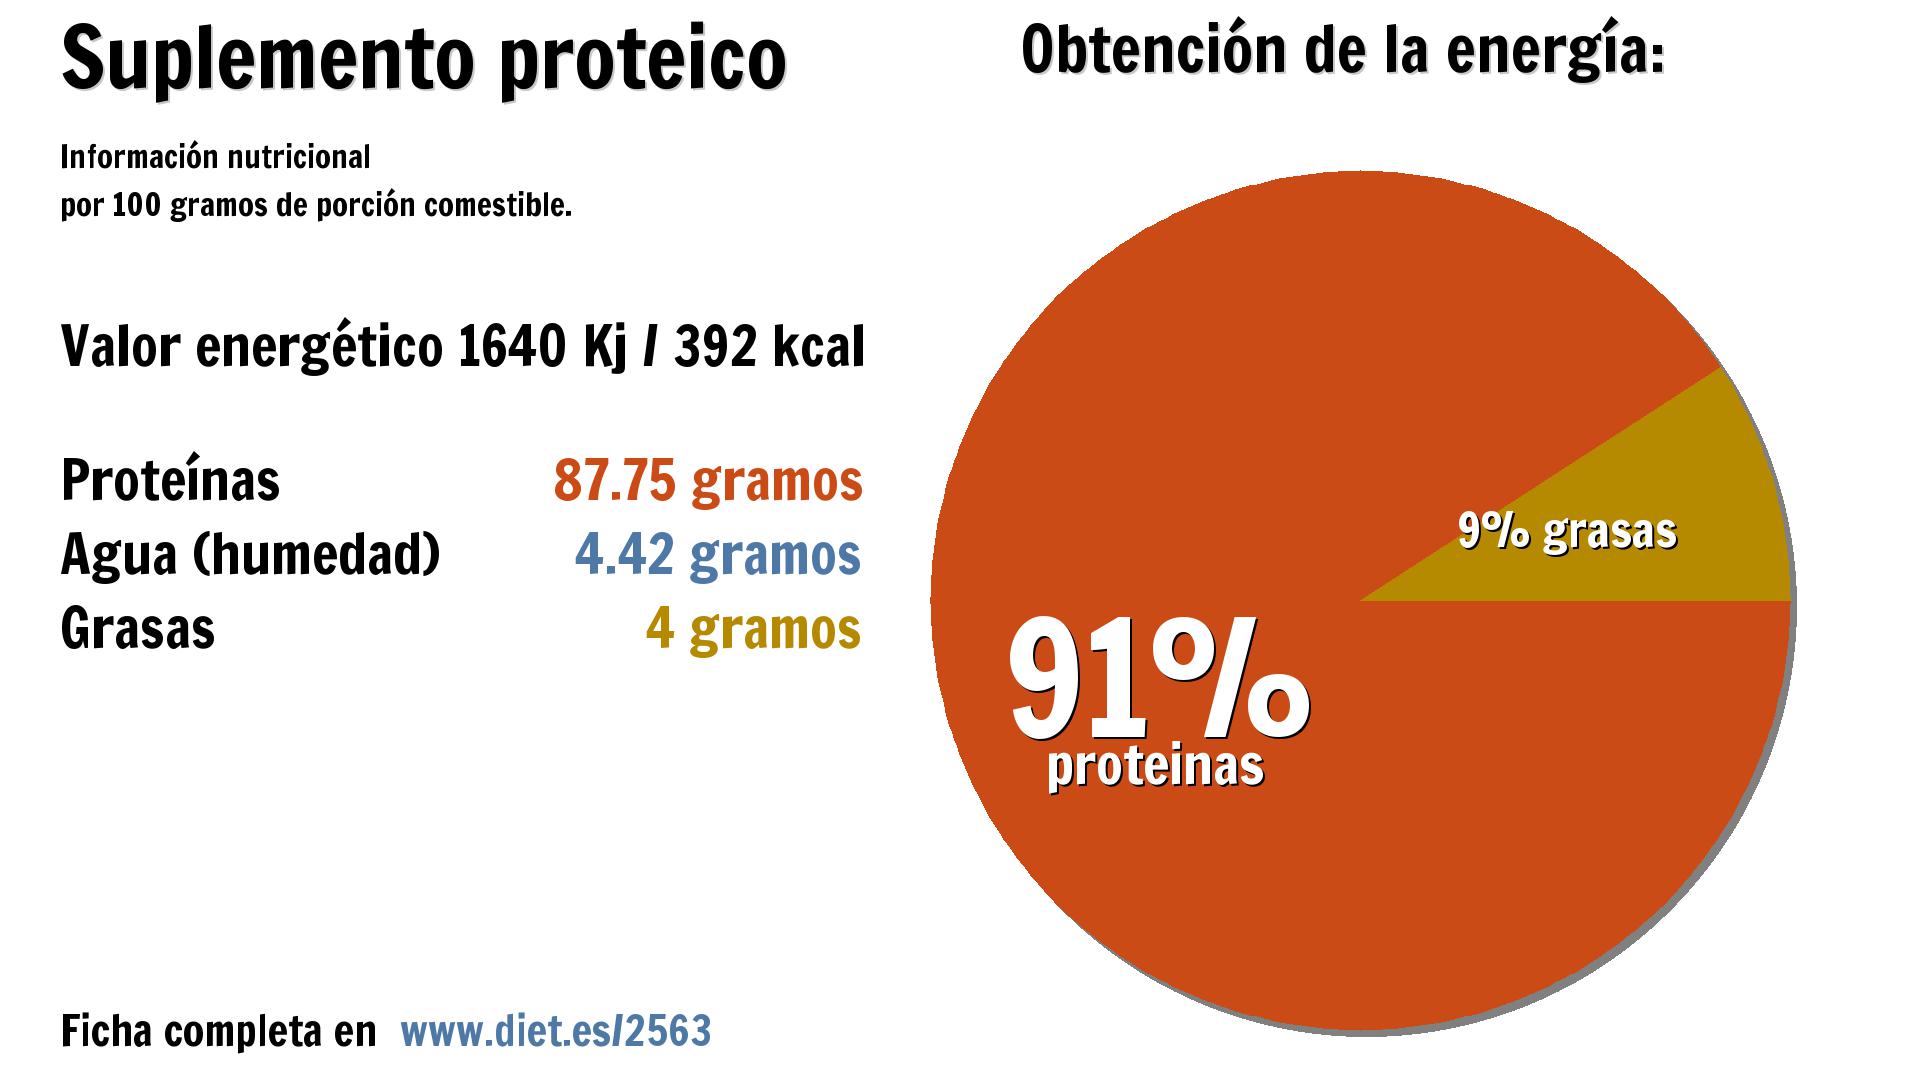 Suplemento proteico: energía 1640 Kj, proteínas 88 g., agua 4 g. y grasas 4 g.